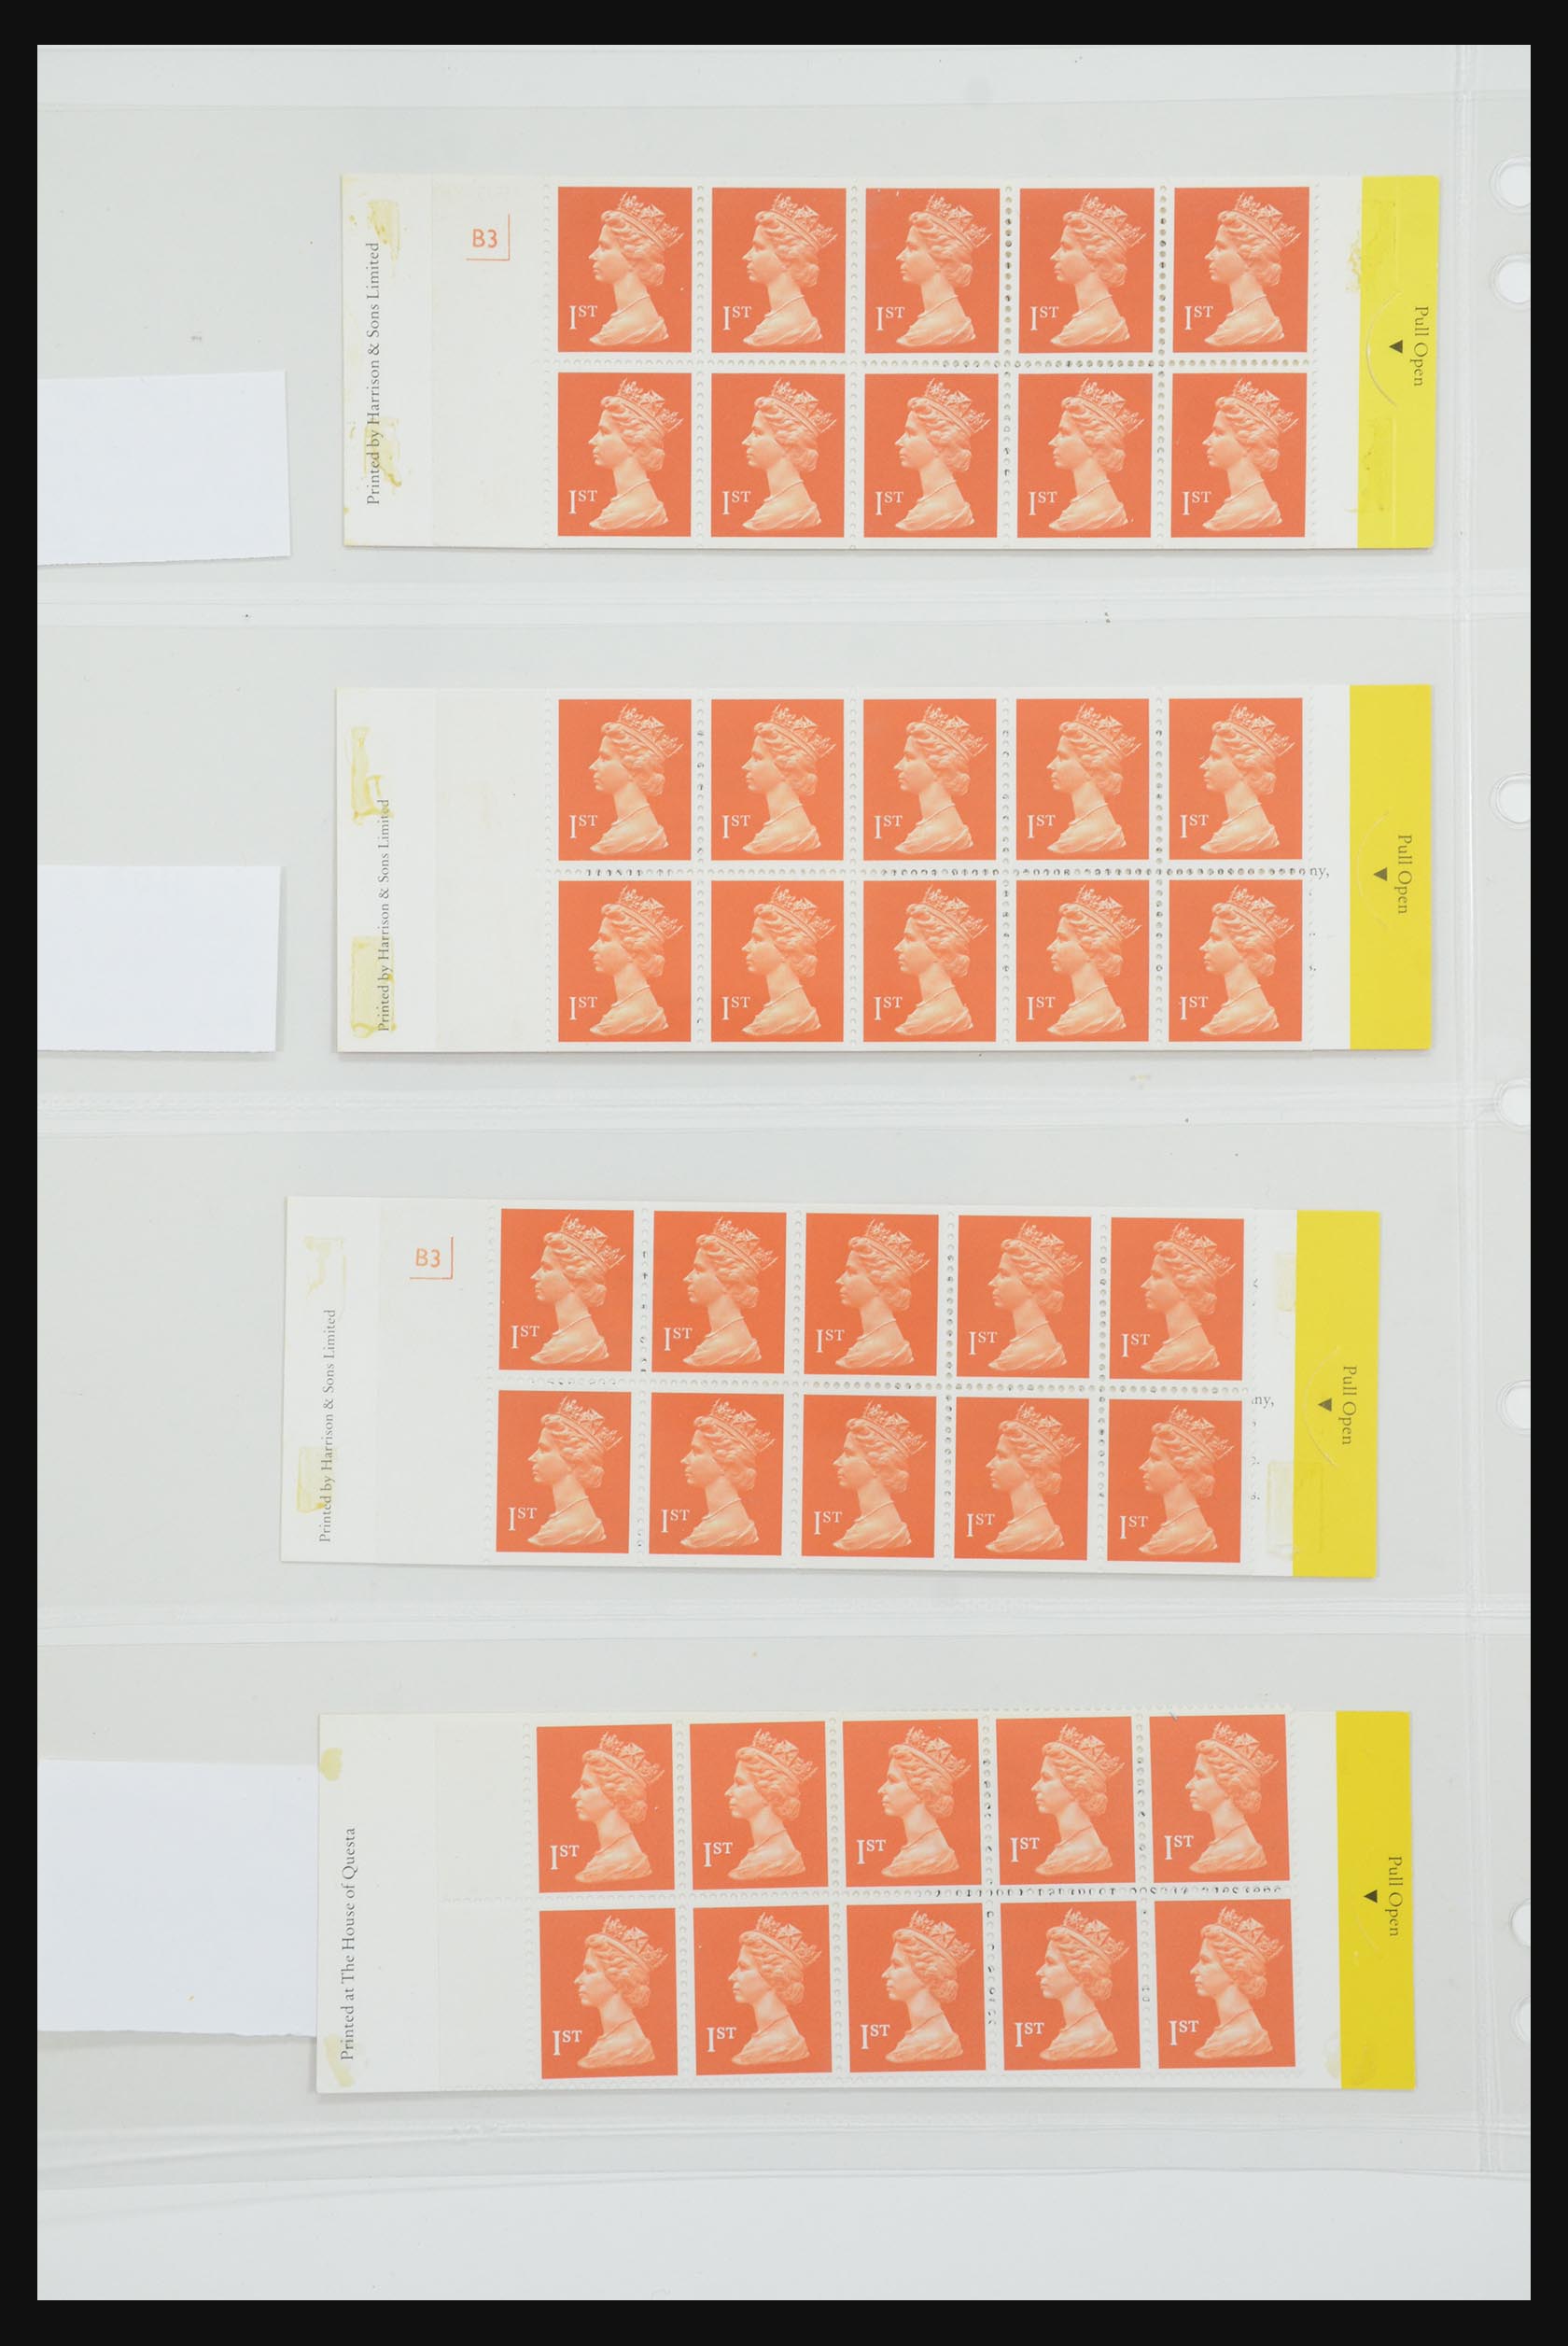 31959 092 - 31959 Great Britain stampbooklets 1987-2016!!